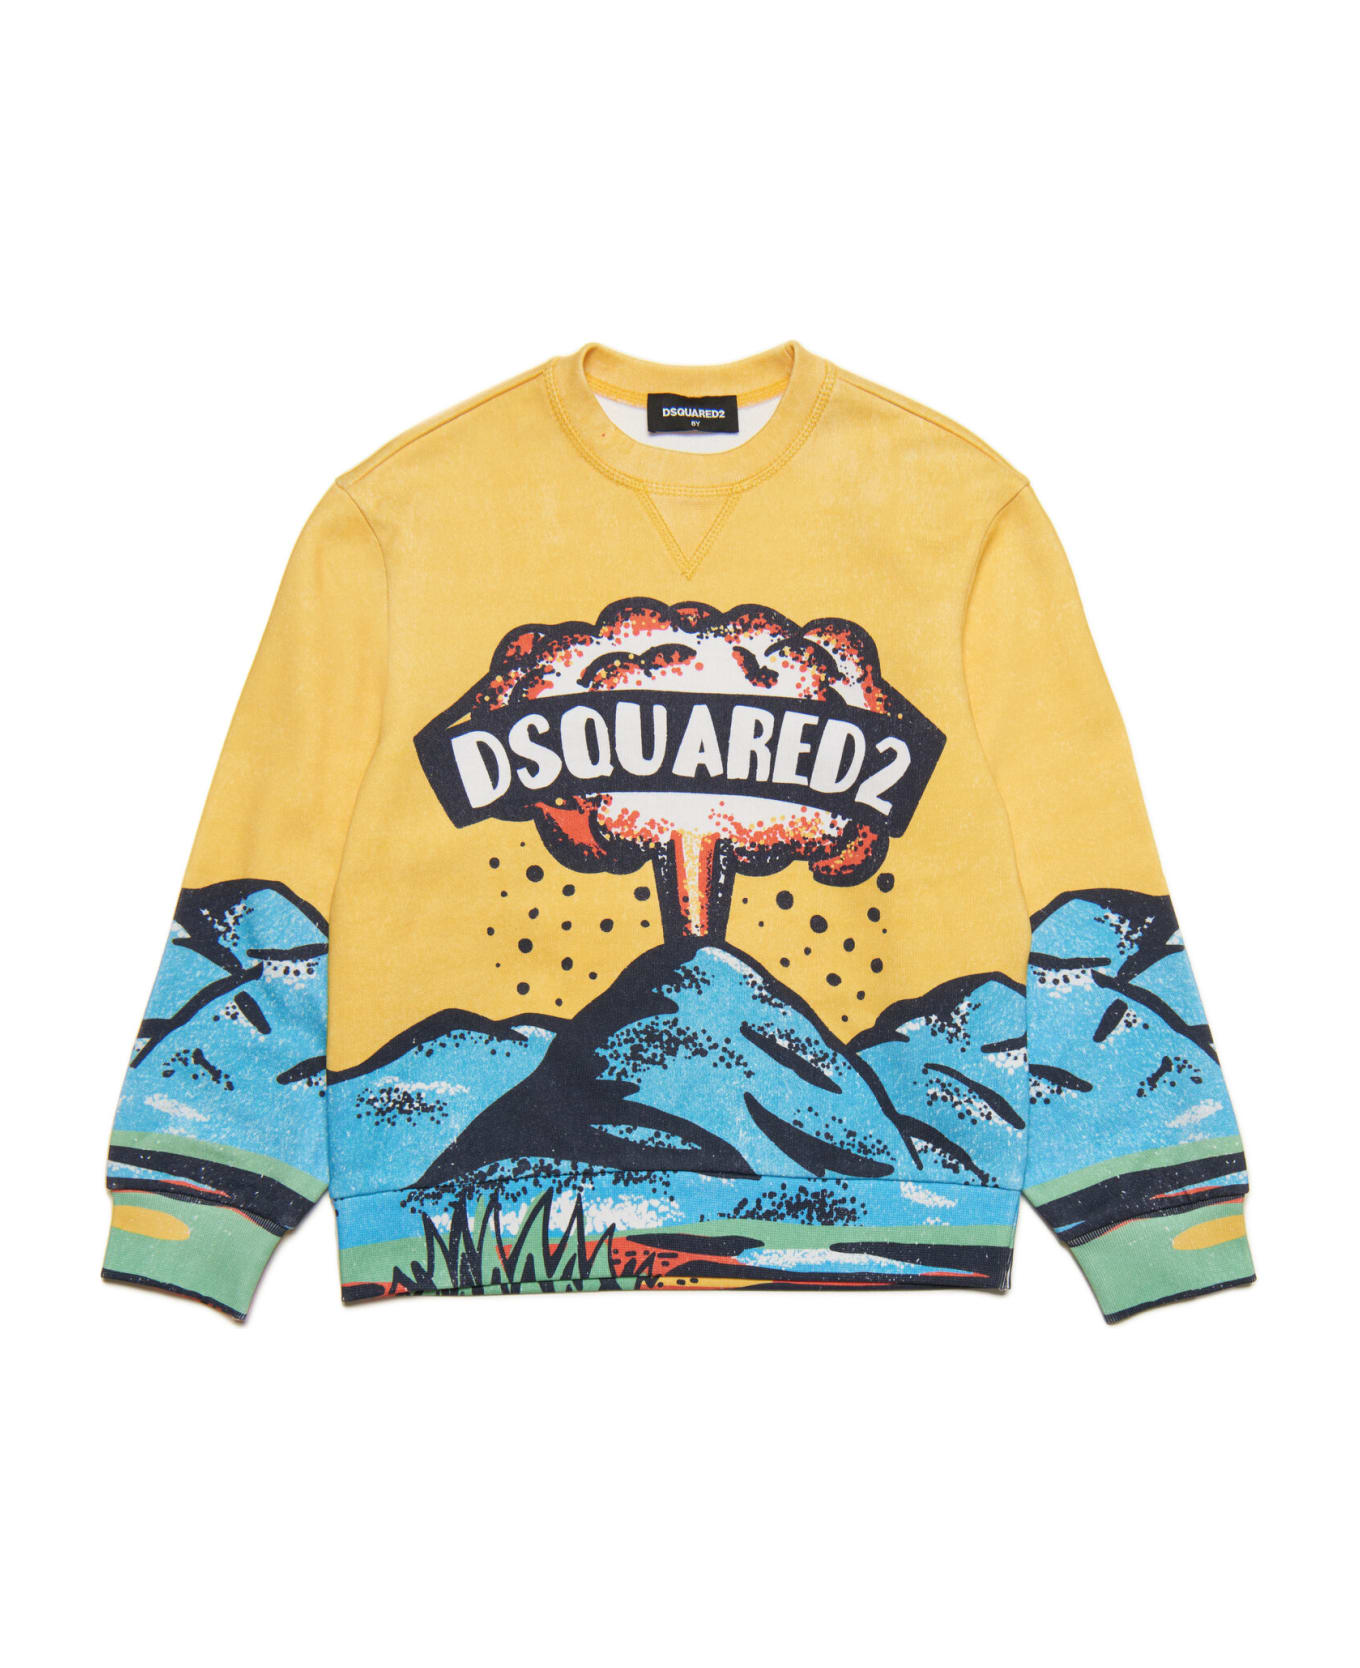 Dsquared2 D2s764u Sweat-shirt Dsquared Cotton Crew-neck Sweatshirt With Volcano Graphics - Lemon Chrome